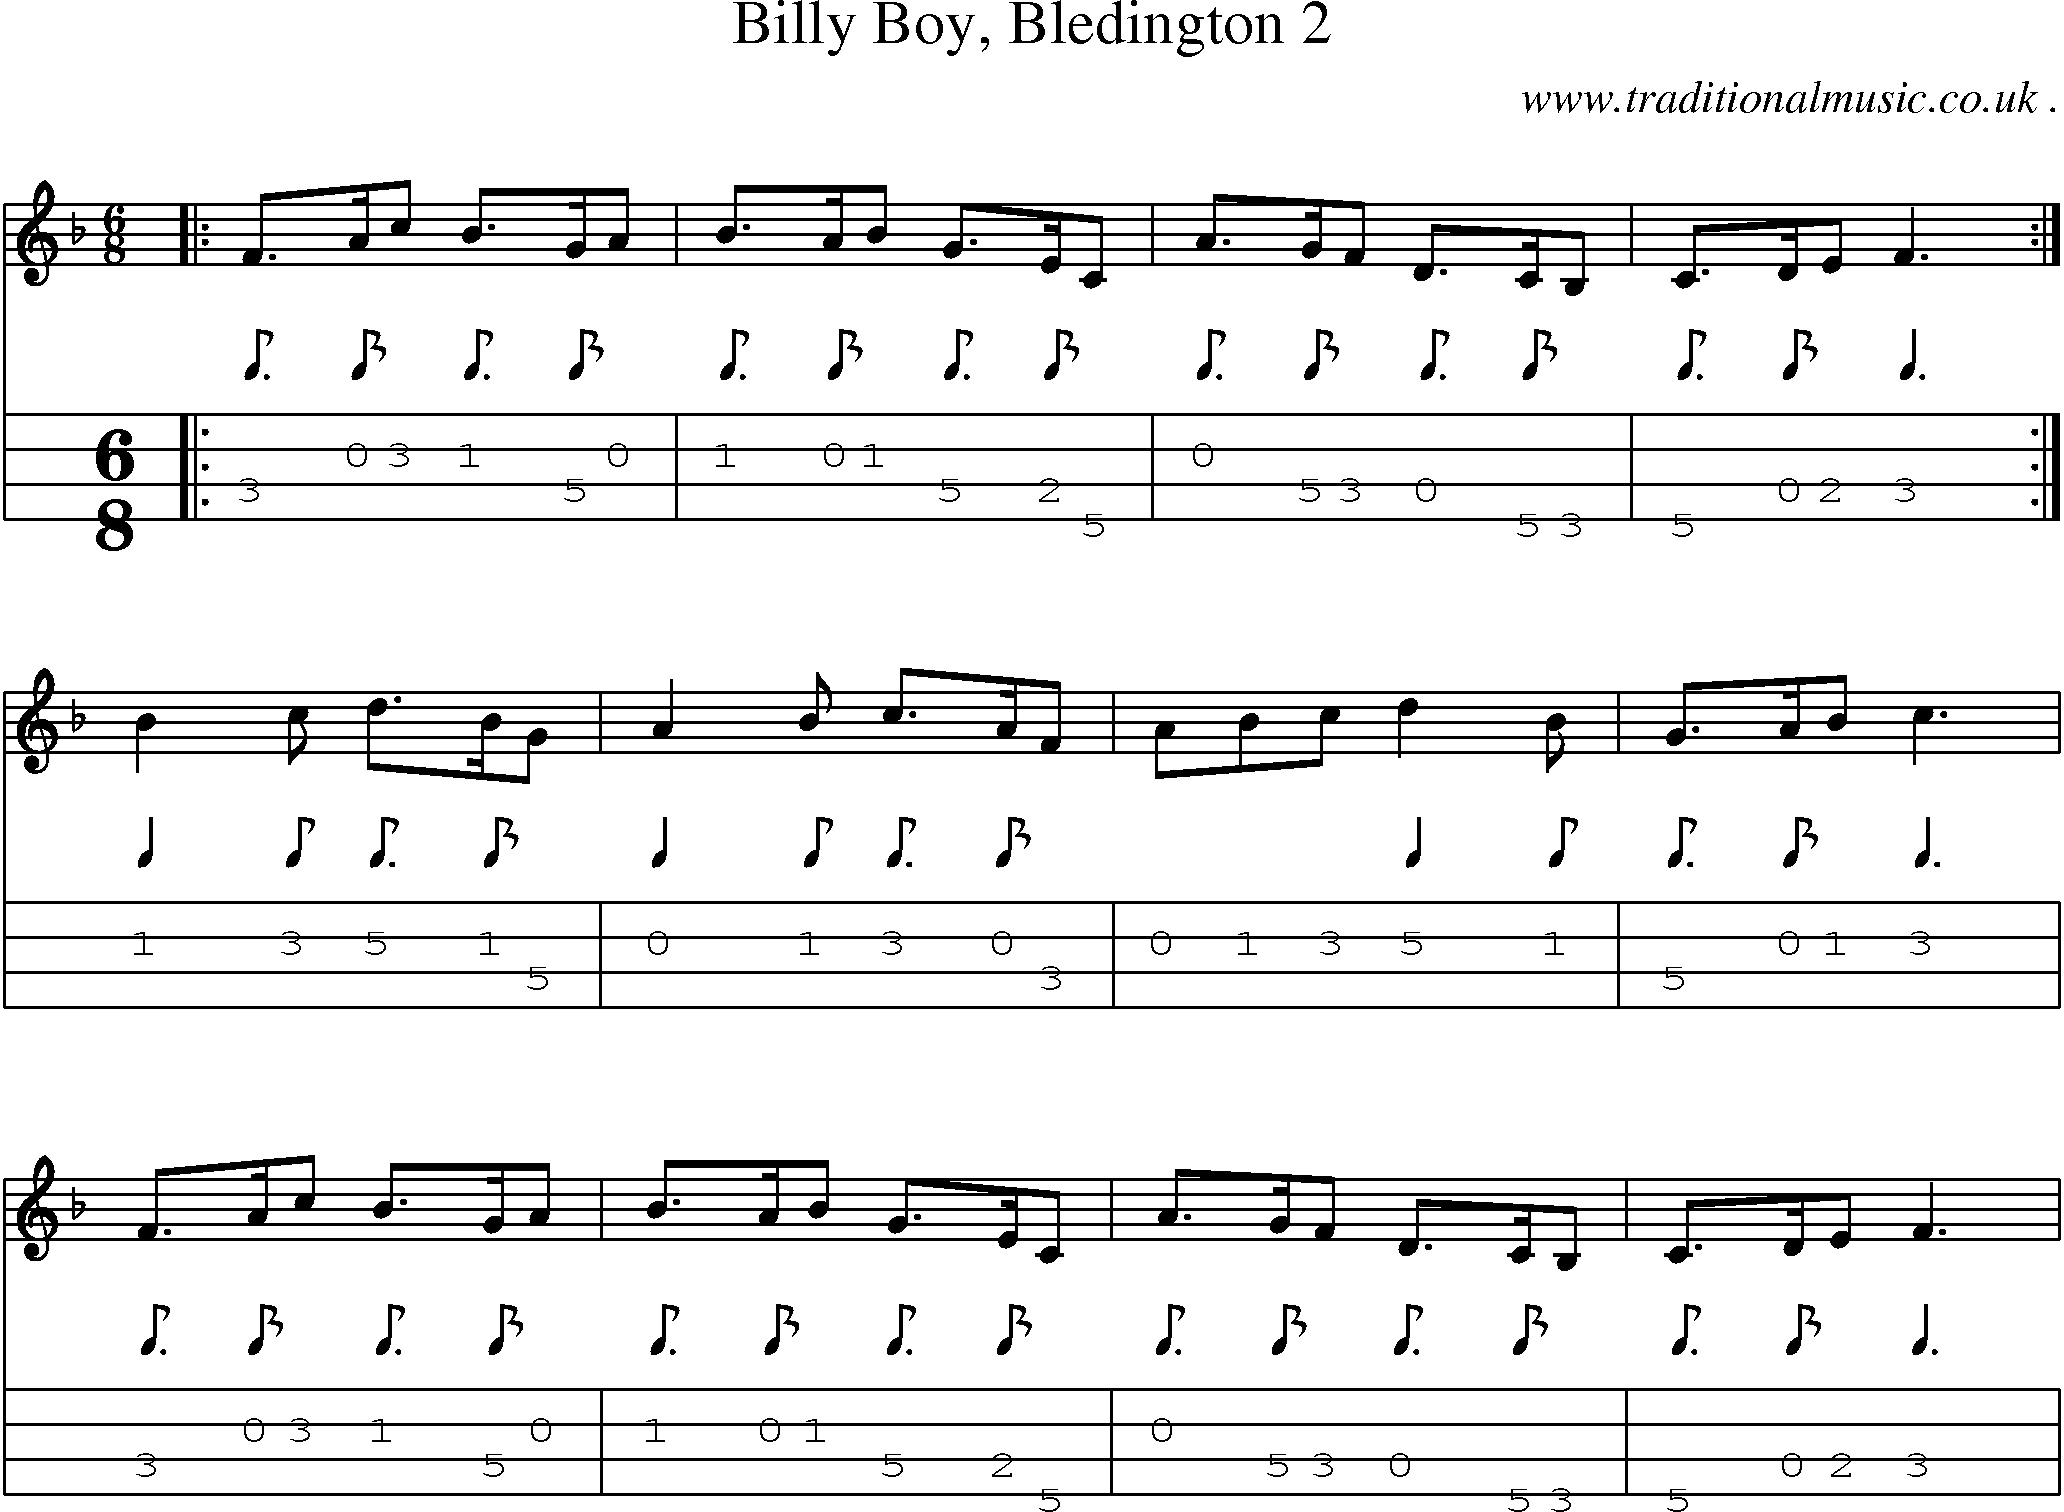 Sheet-Music and Mandolin Tabs for Billy Boy Bledington 2